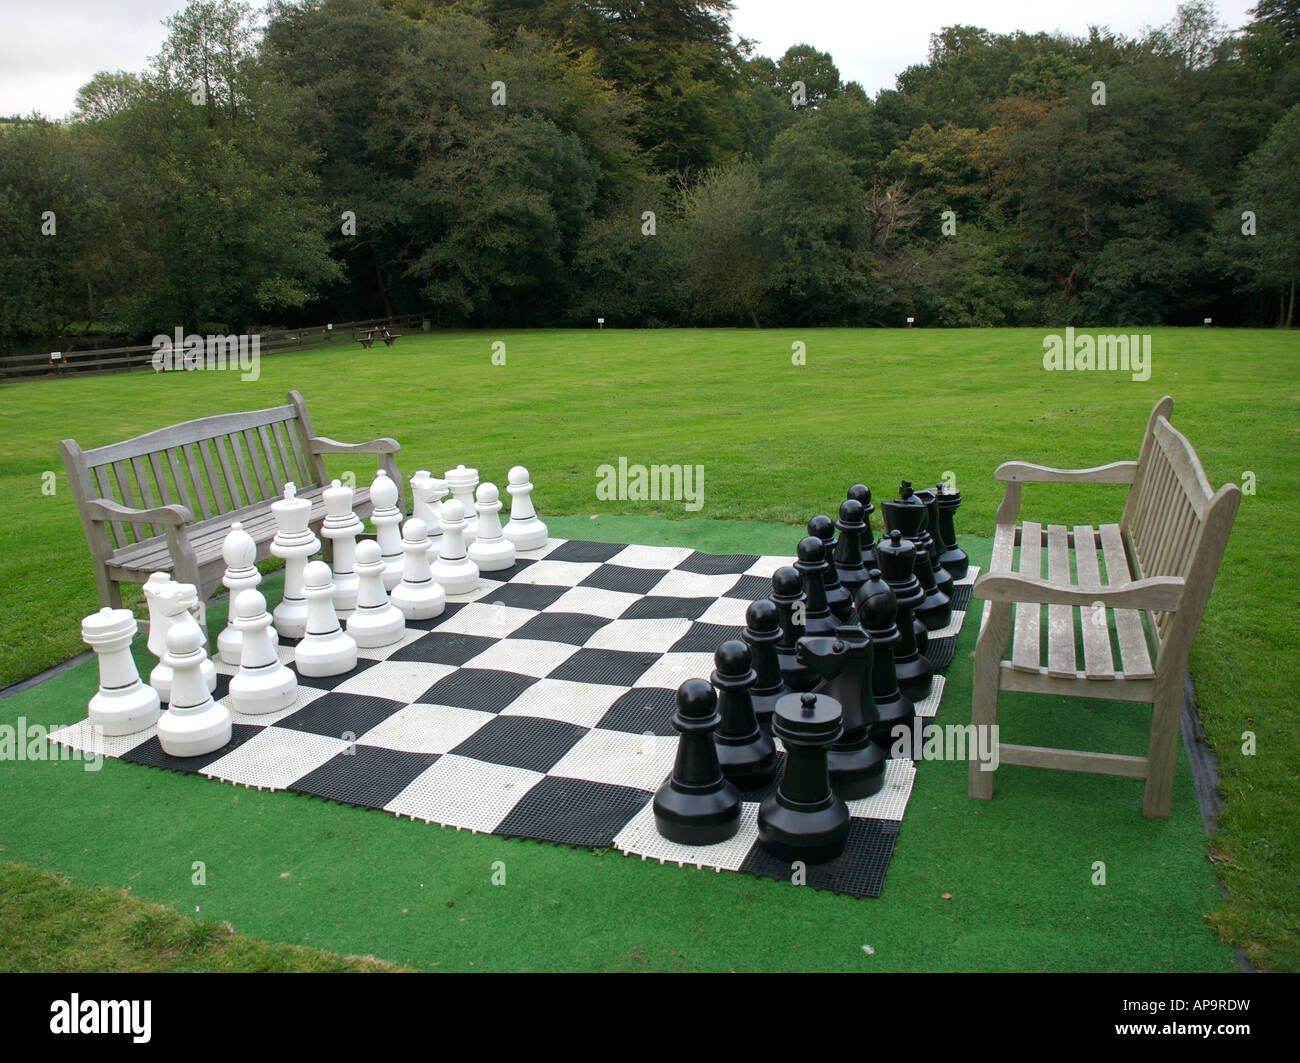 Giant chess set in garden Stock Photo